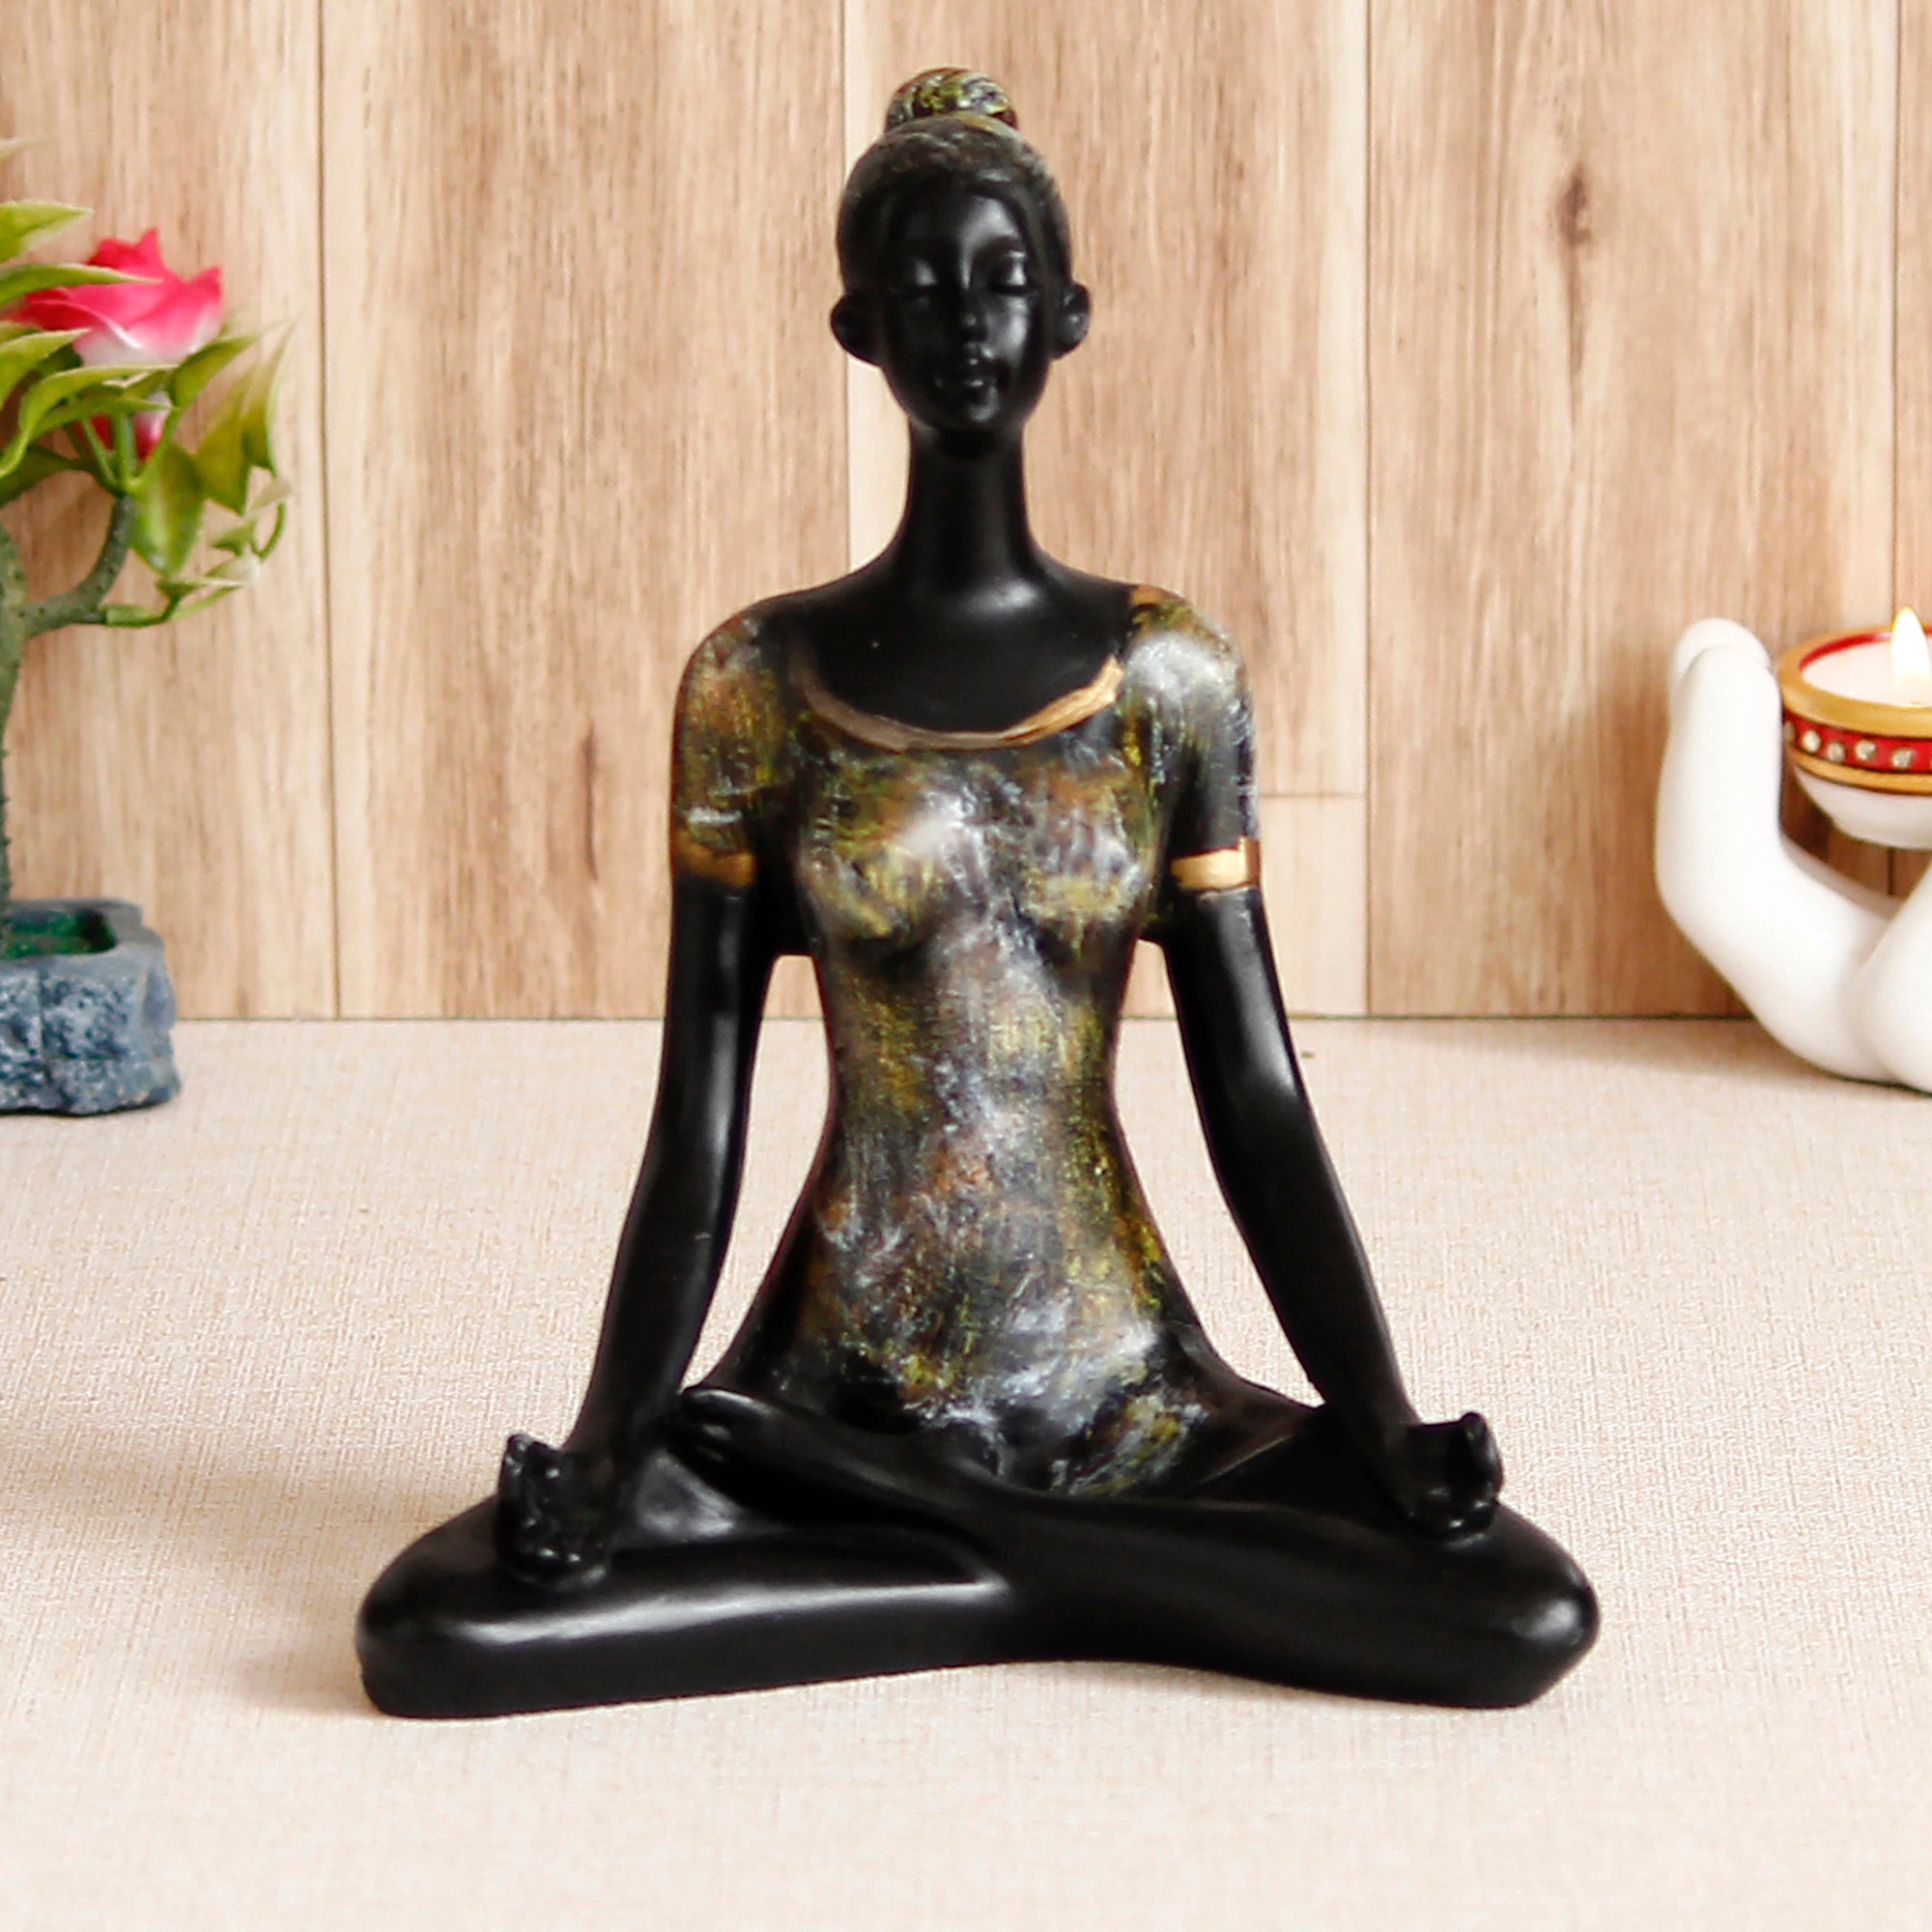 Grey and Black Polyresin Meditating lady in Sukhasana Yoga Pose Handcrafted Decorative Showpiece 1